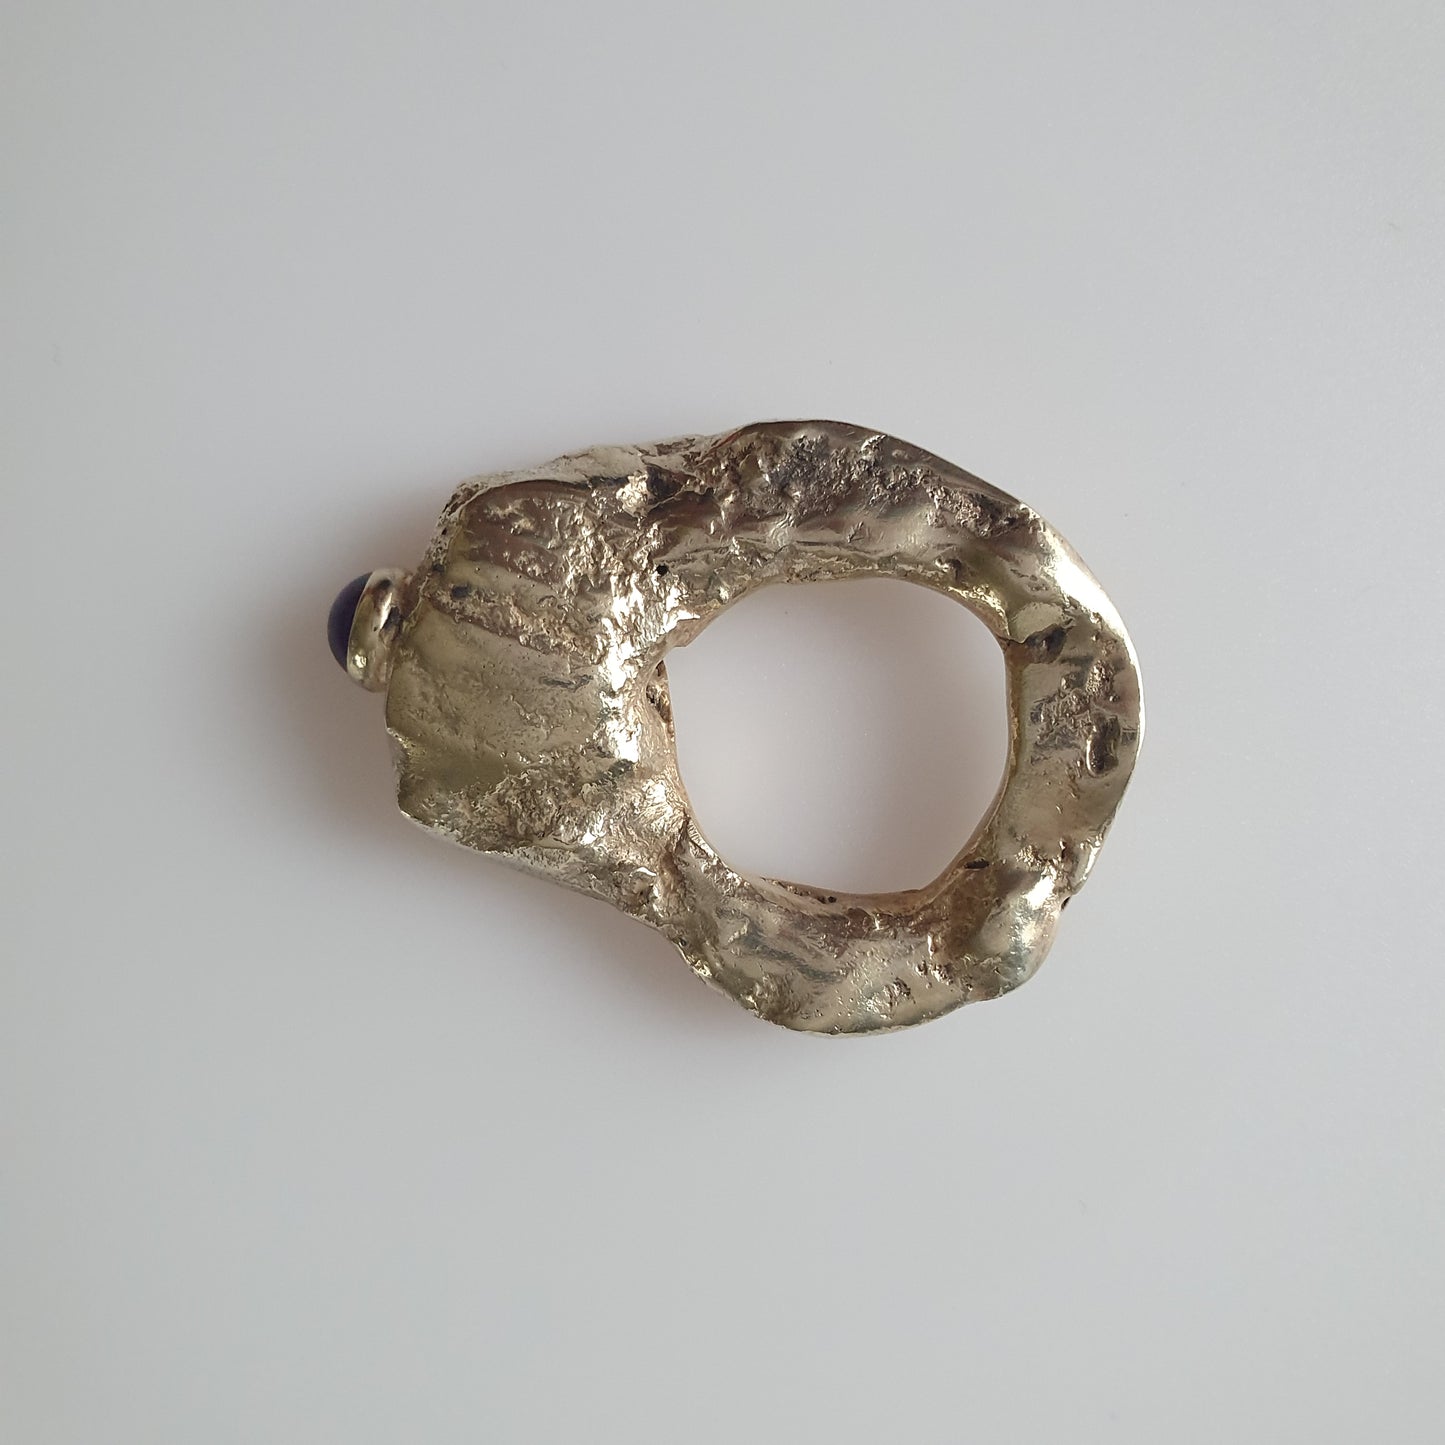 18ct gold plated ring on silver,Vintage ring, handmade, statement ring, sterling silver, unique, unusual, rare, designer, brutalist, minimalist, punk, amethyst gemstone